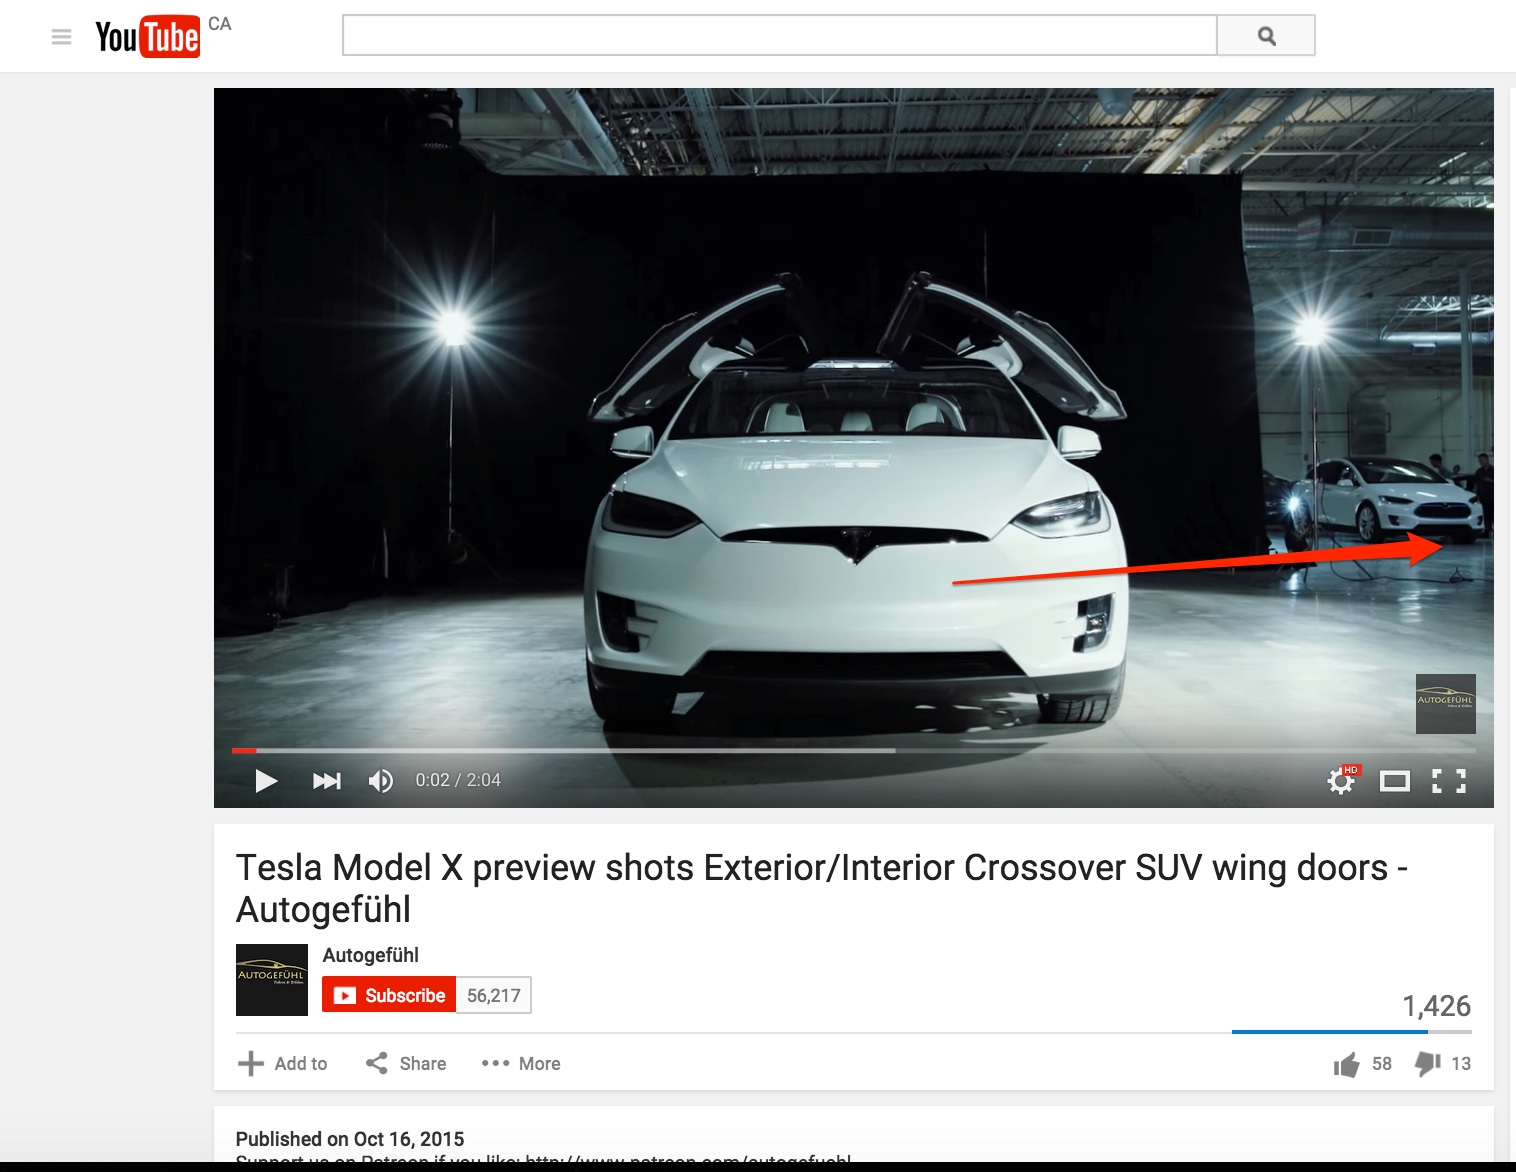 Tesla_Model_X_preview_shots_Exterior_Interior_Crossover_SUV_wing_doors_-_Autogefühl_-_YouTube_an.jpg